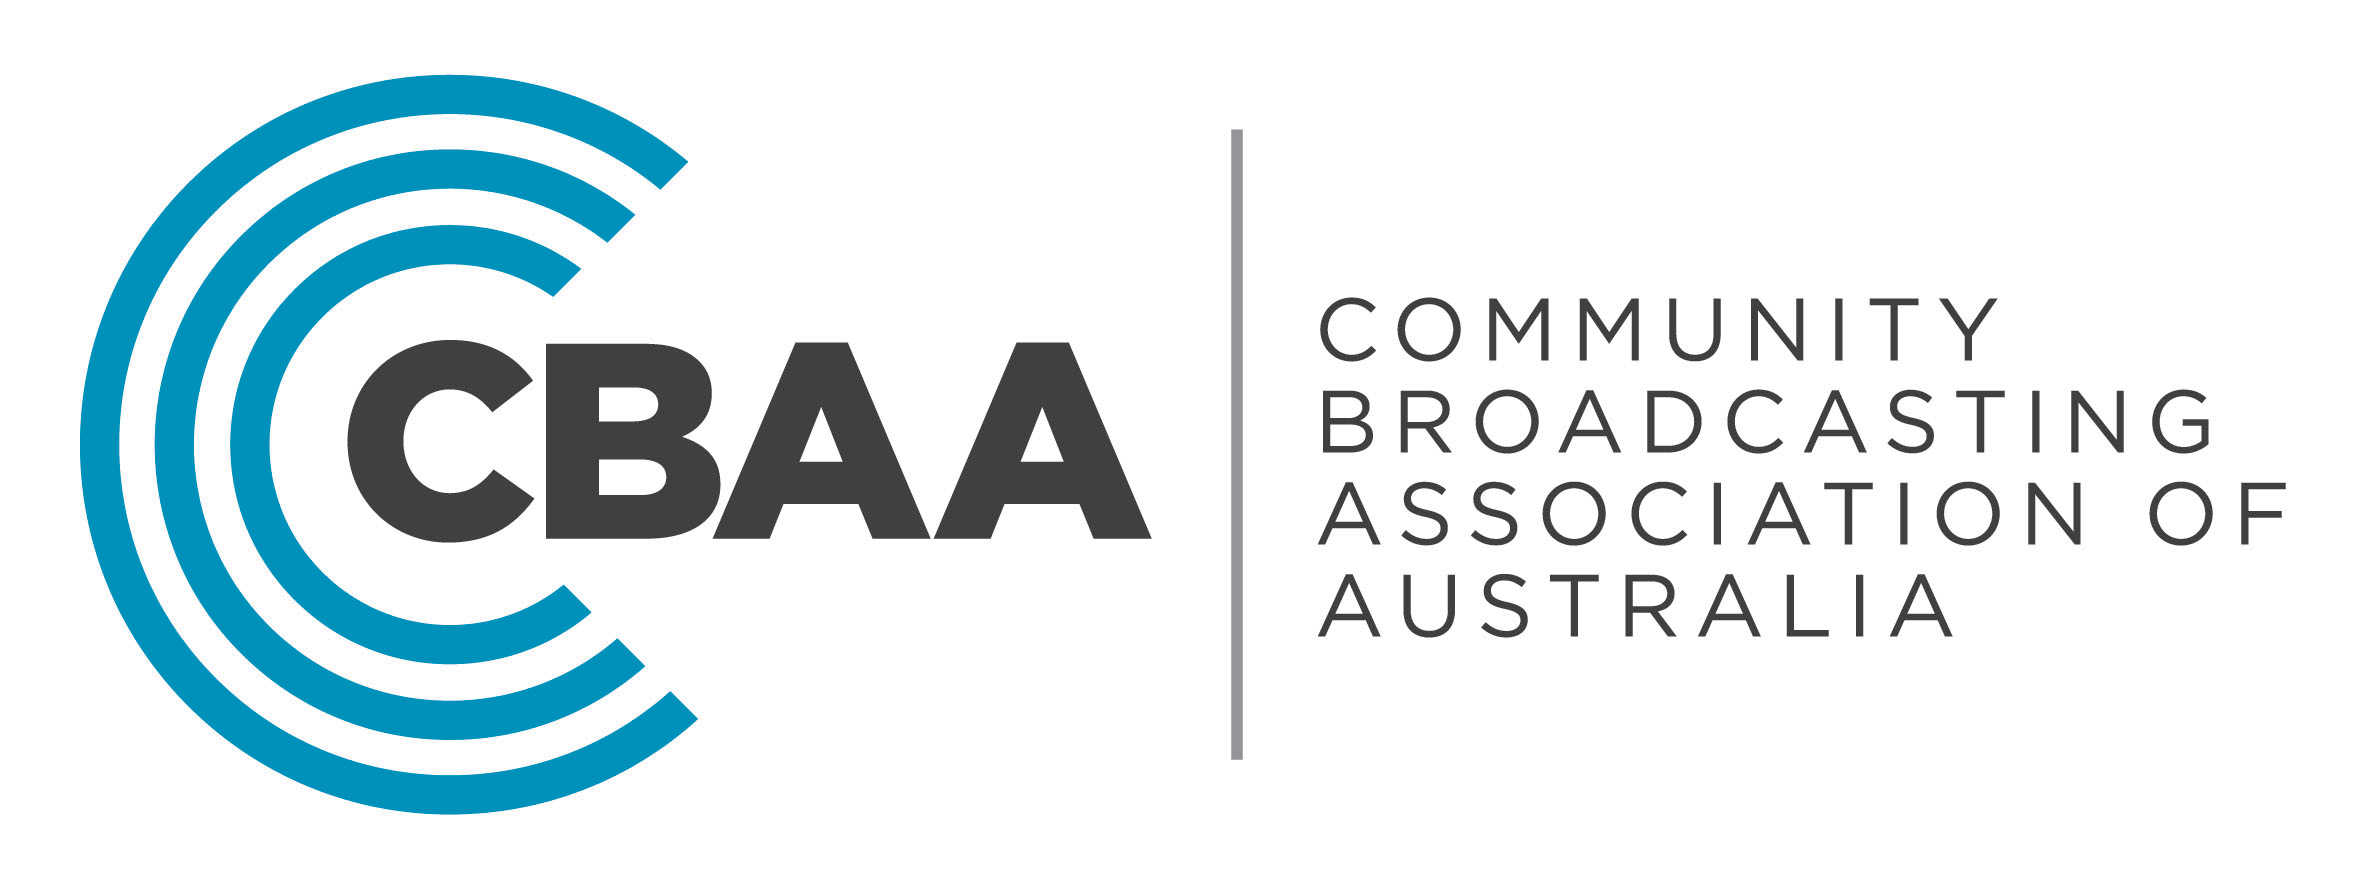 CBAA - Community Broadcasting Association Australia